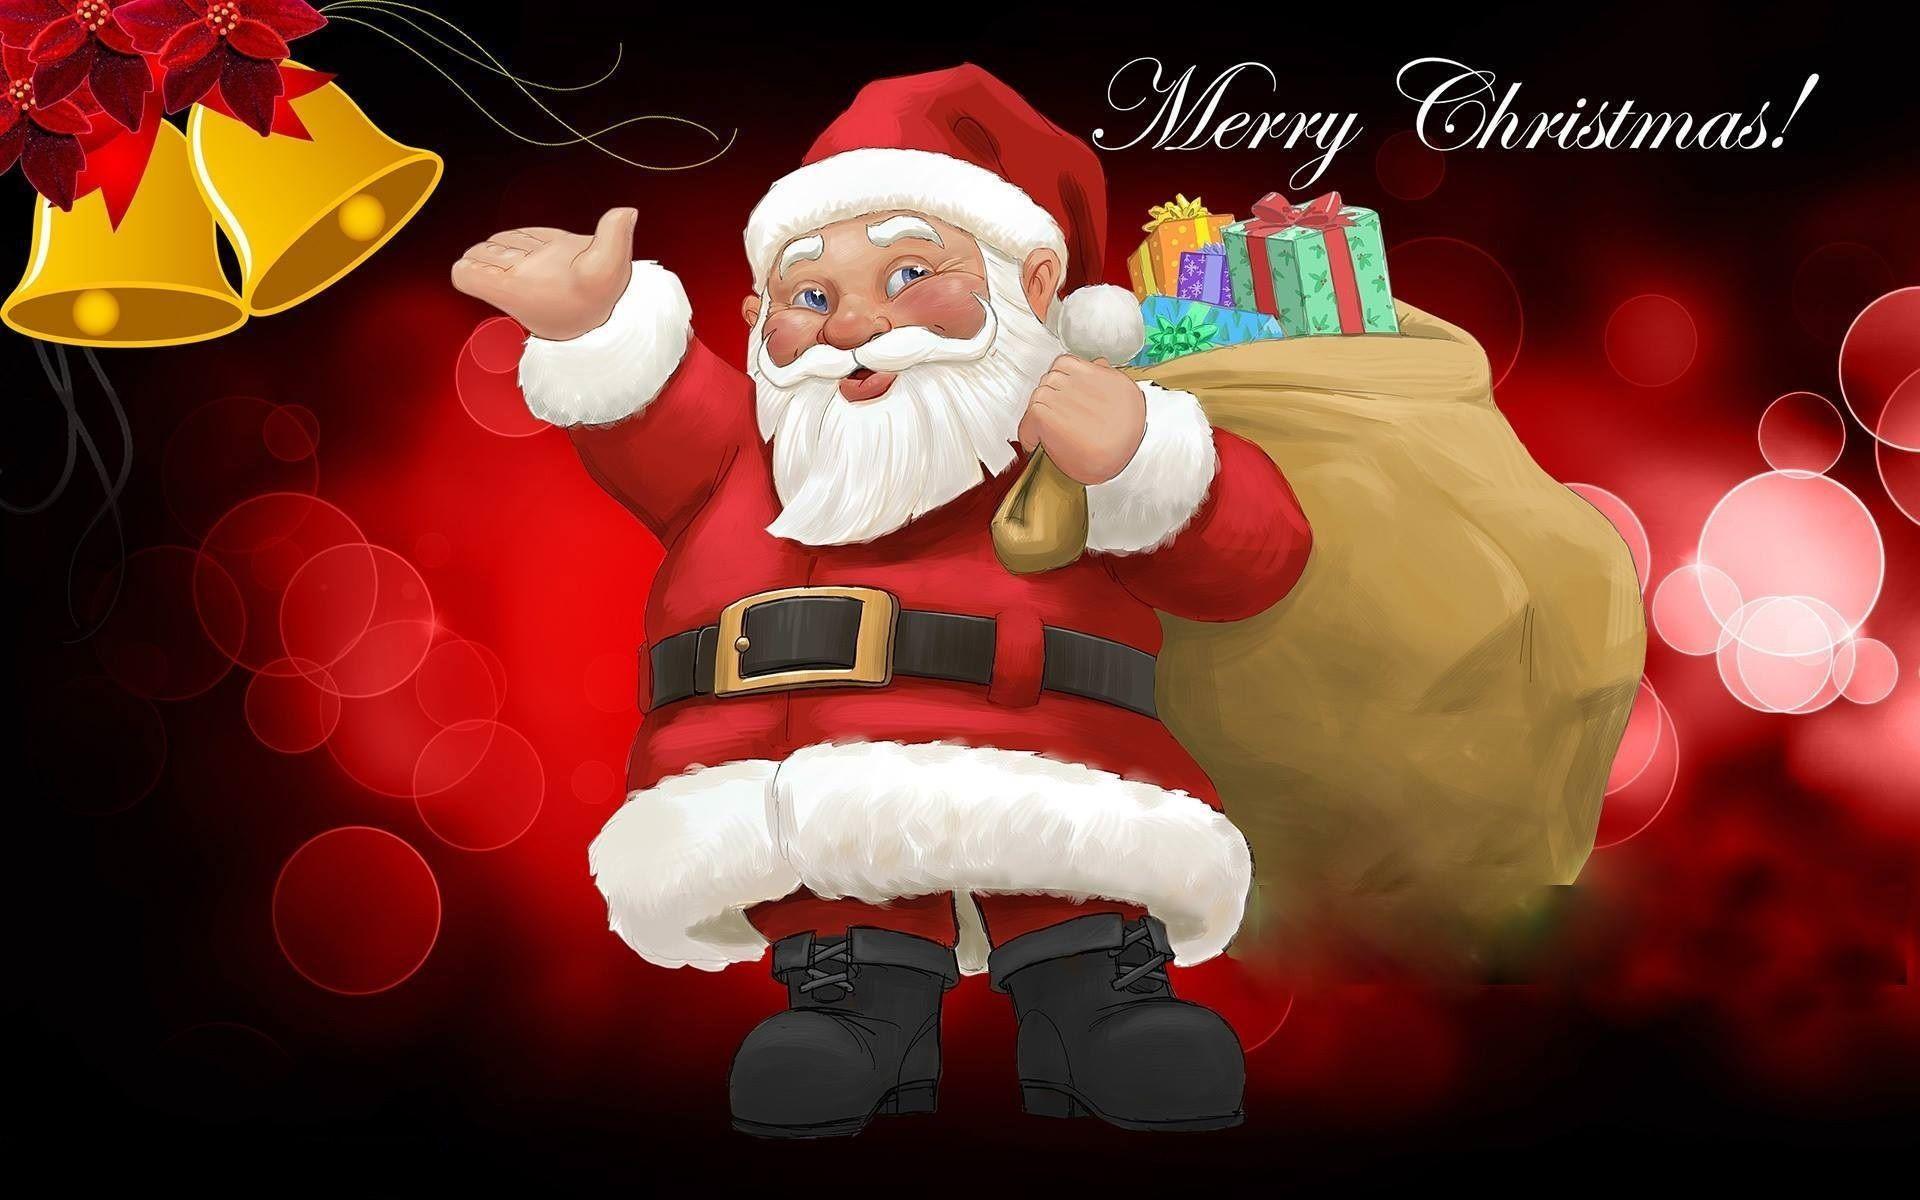 Merry Christmas Santa Claus Image 2019 HD Wallpaper